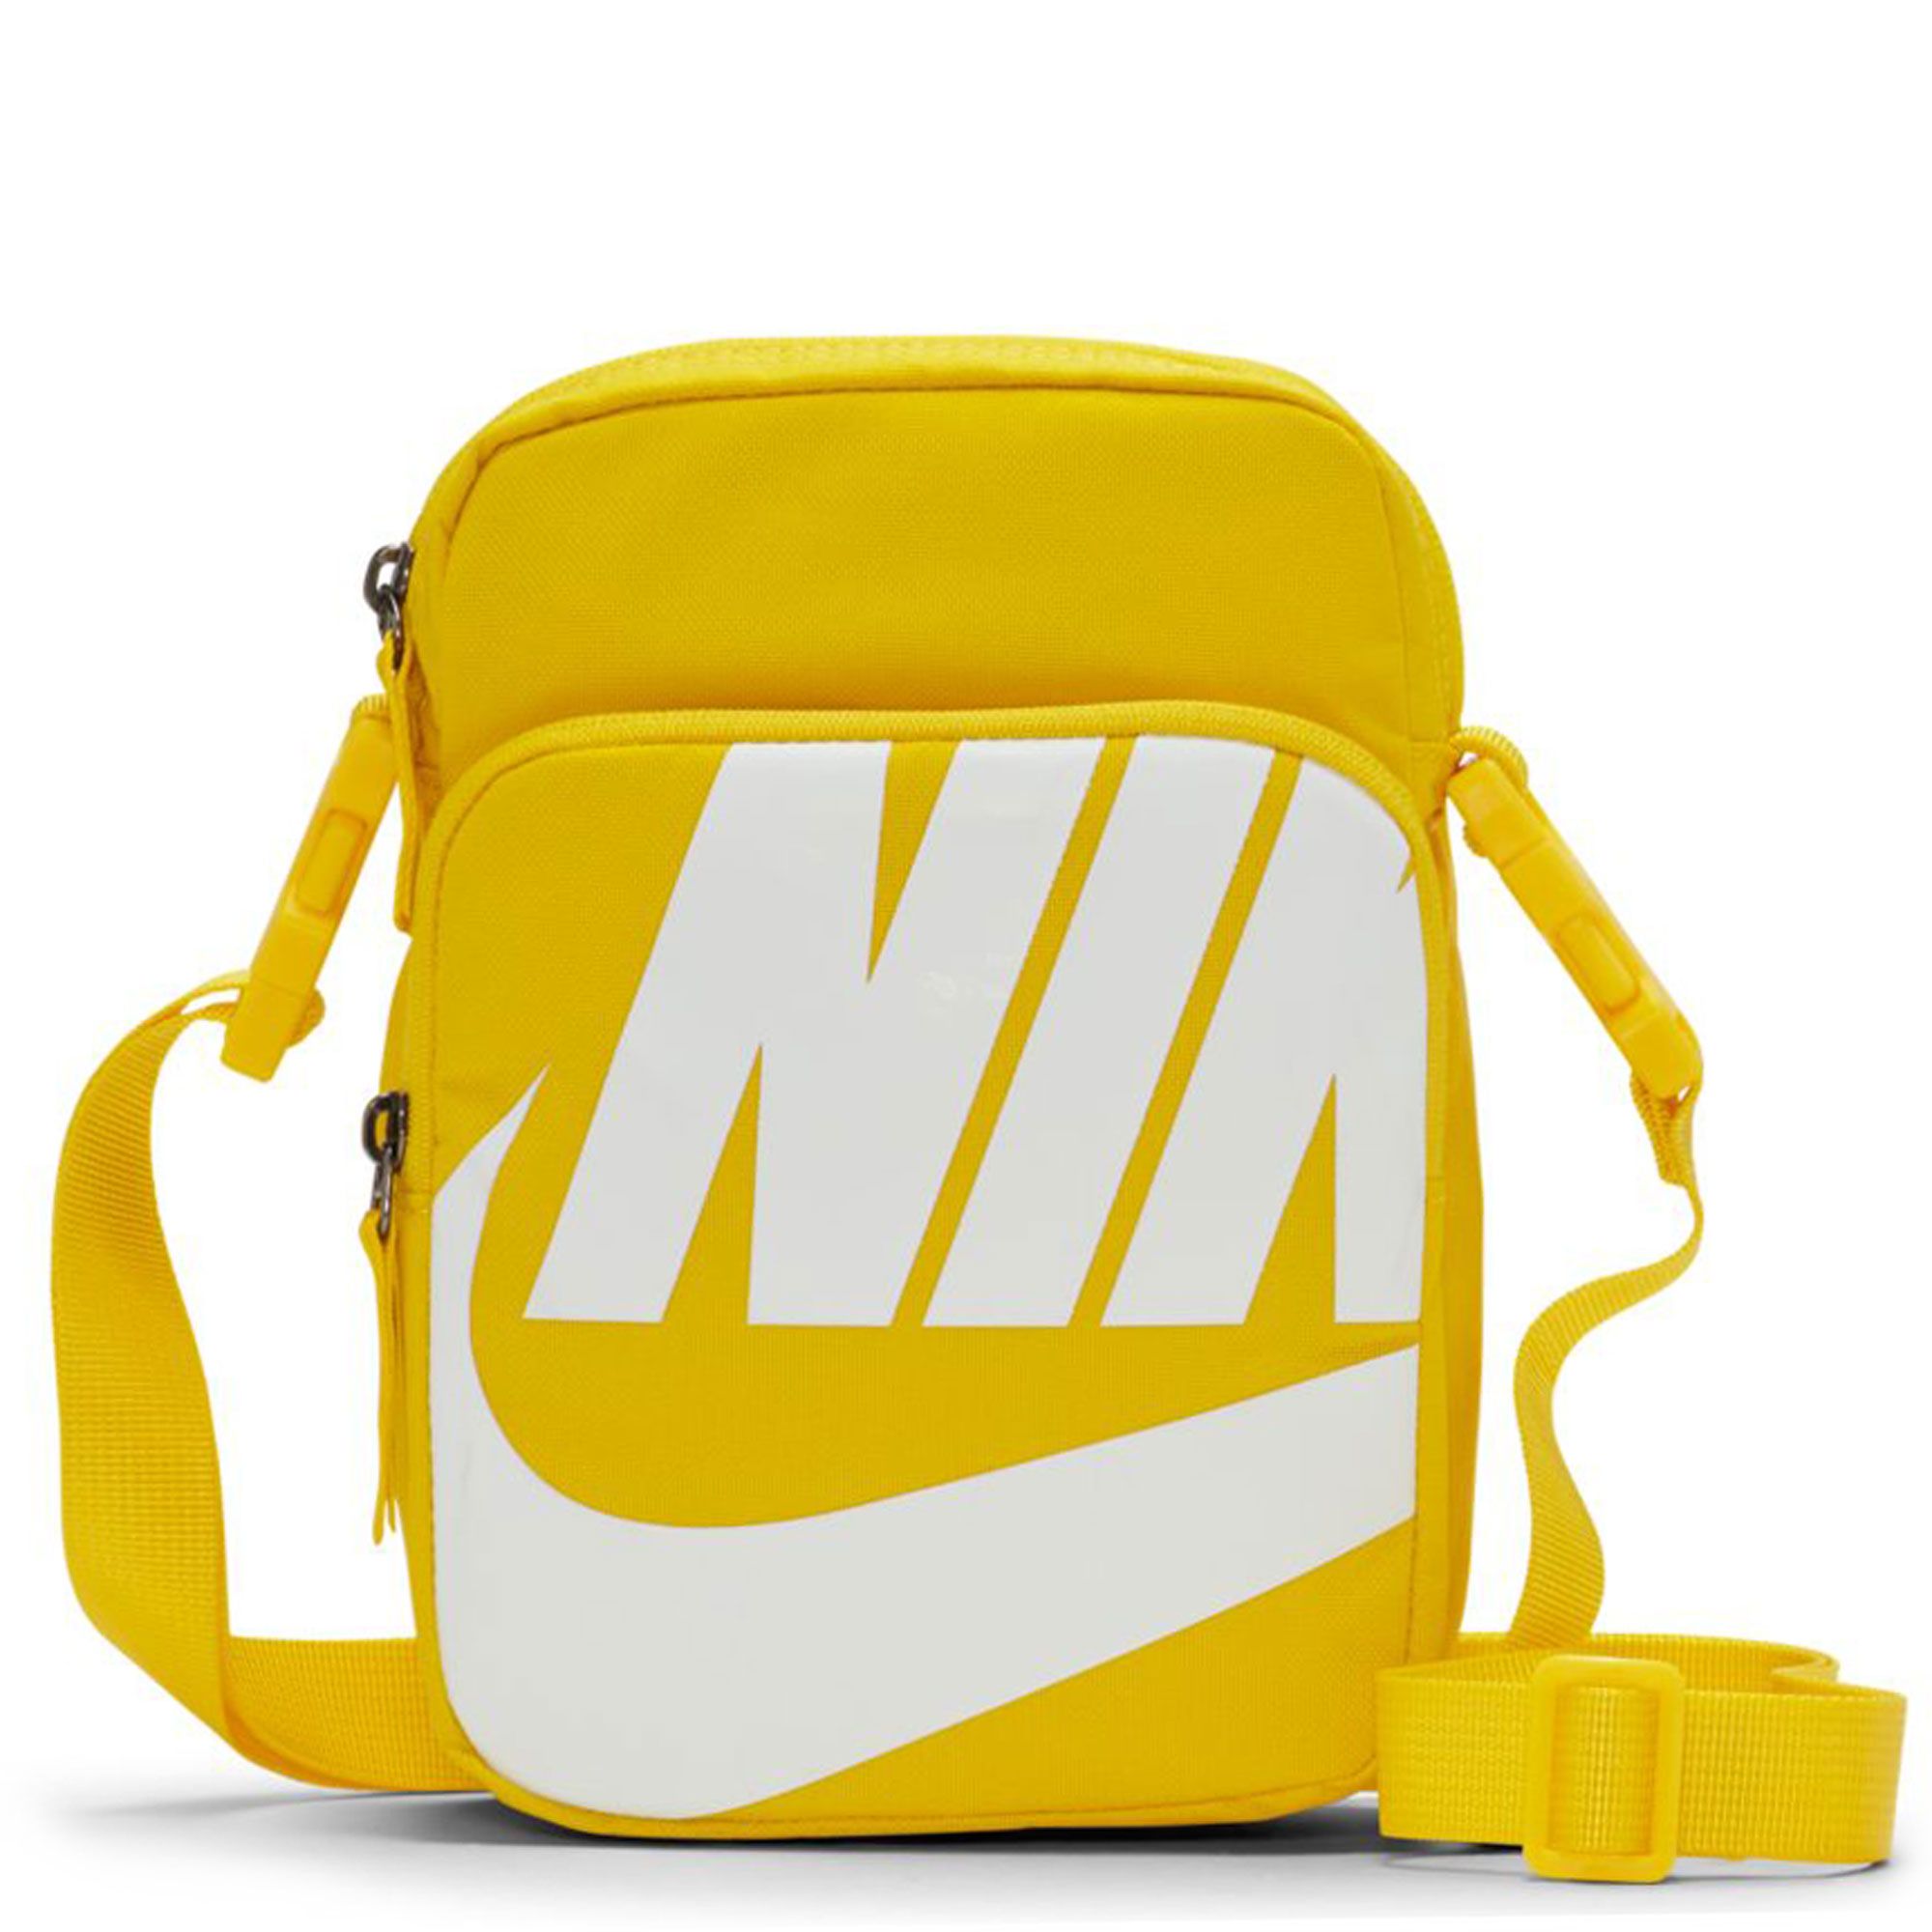 Nike Heritage 2.0 Bag